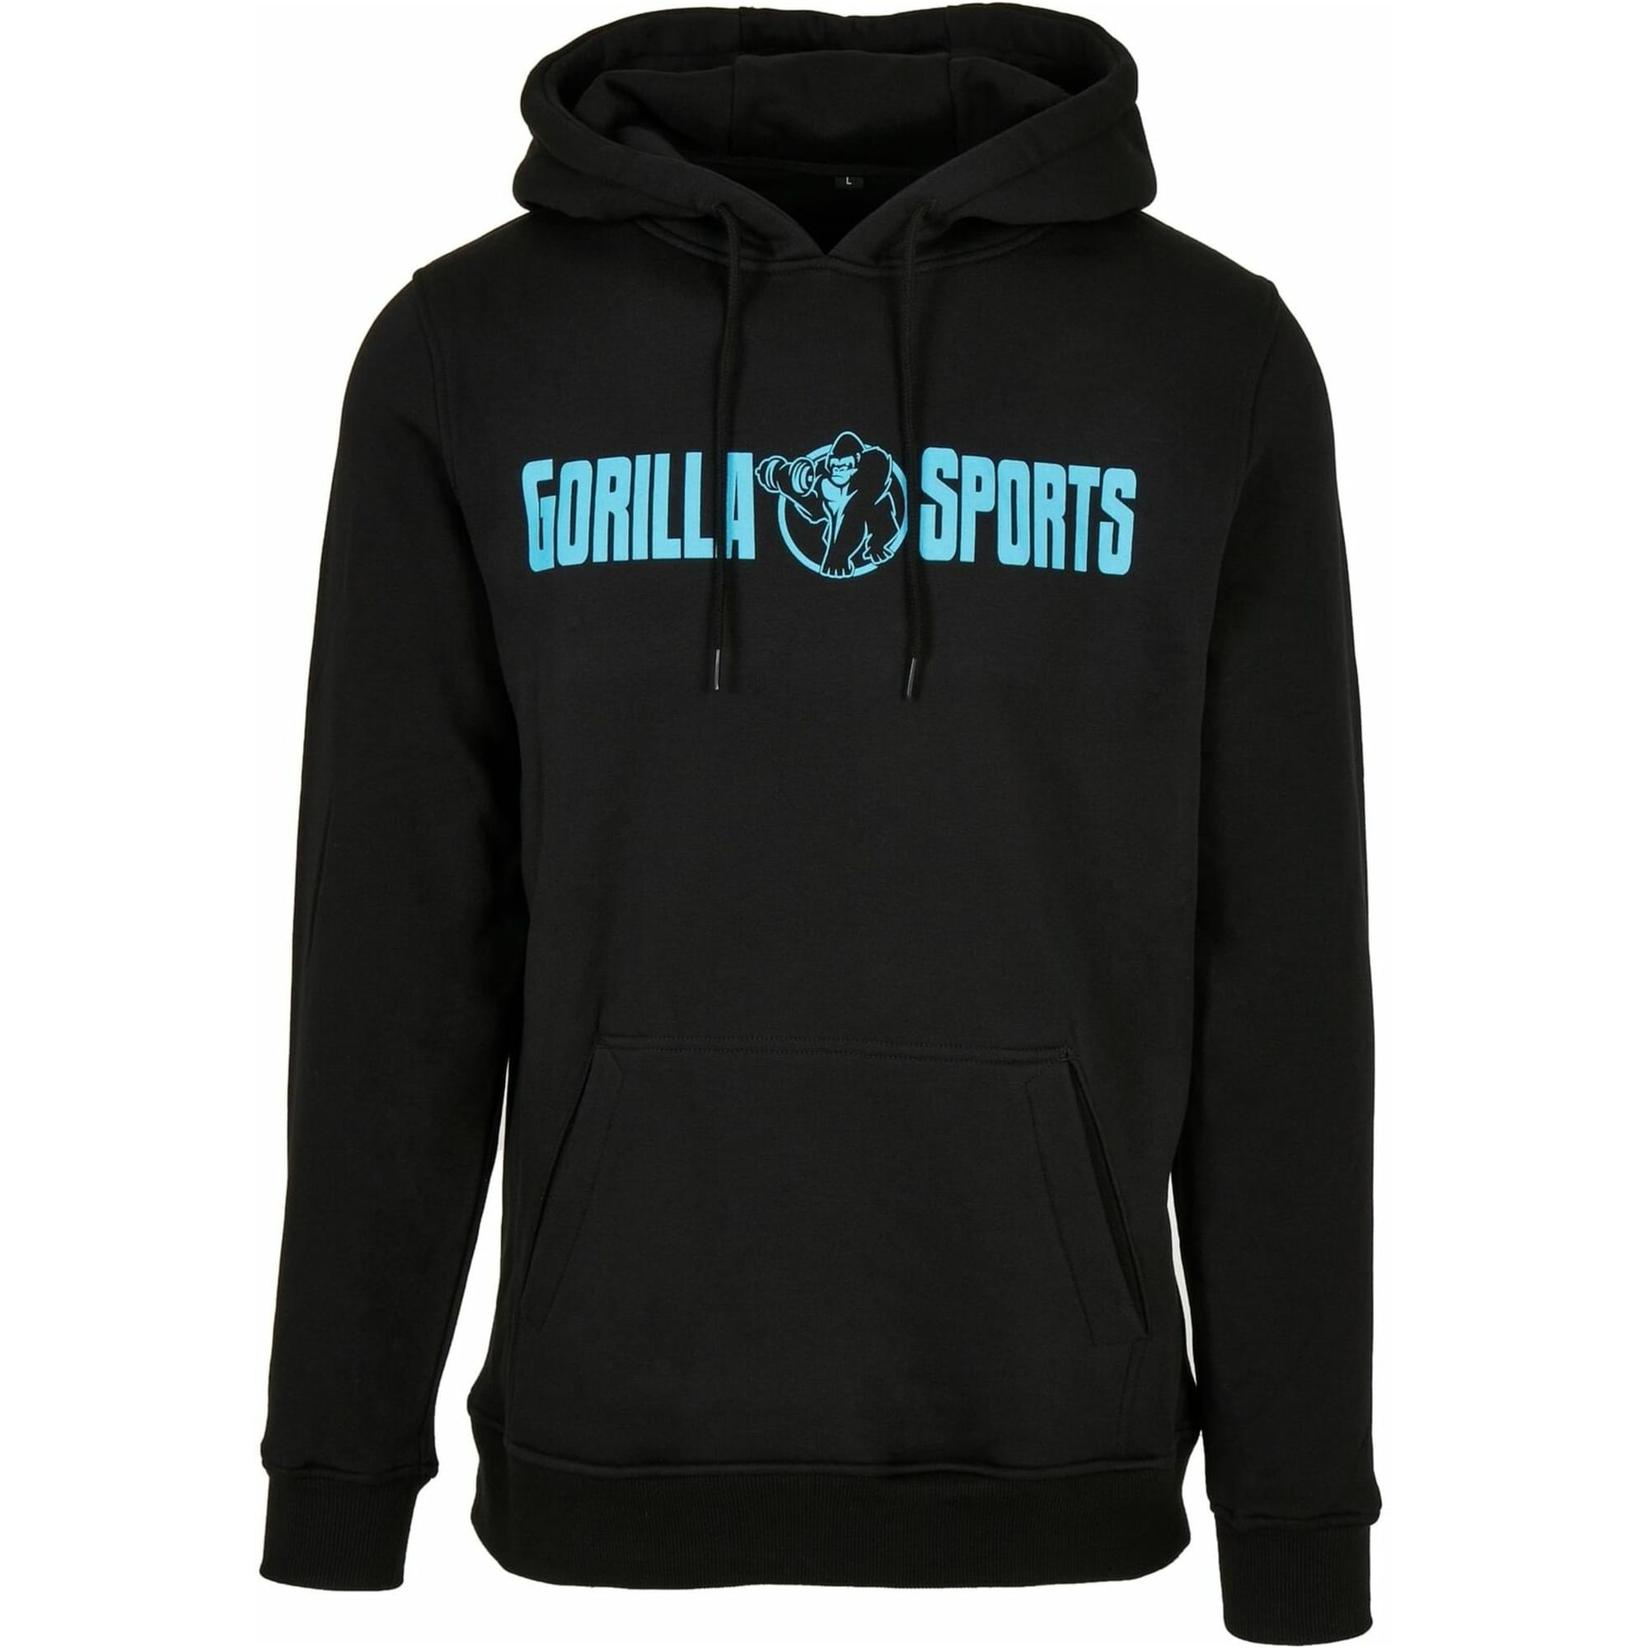 Selected image for GORILLA SPORTS Unisex sportski duks crni